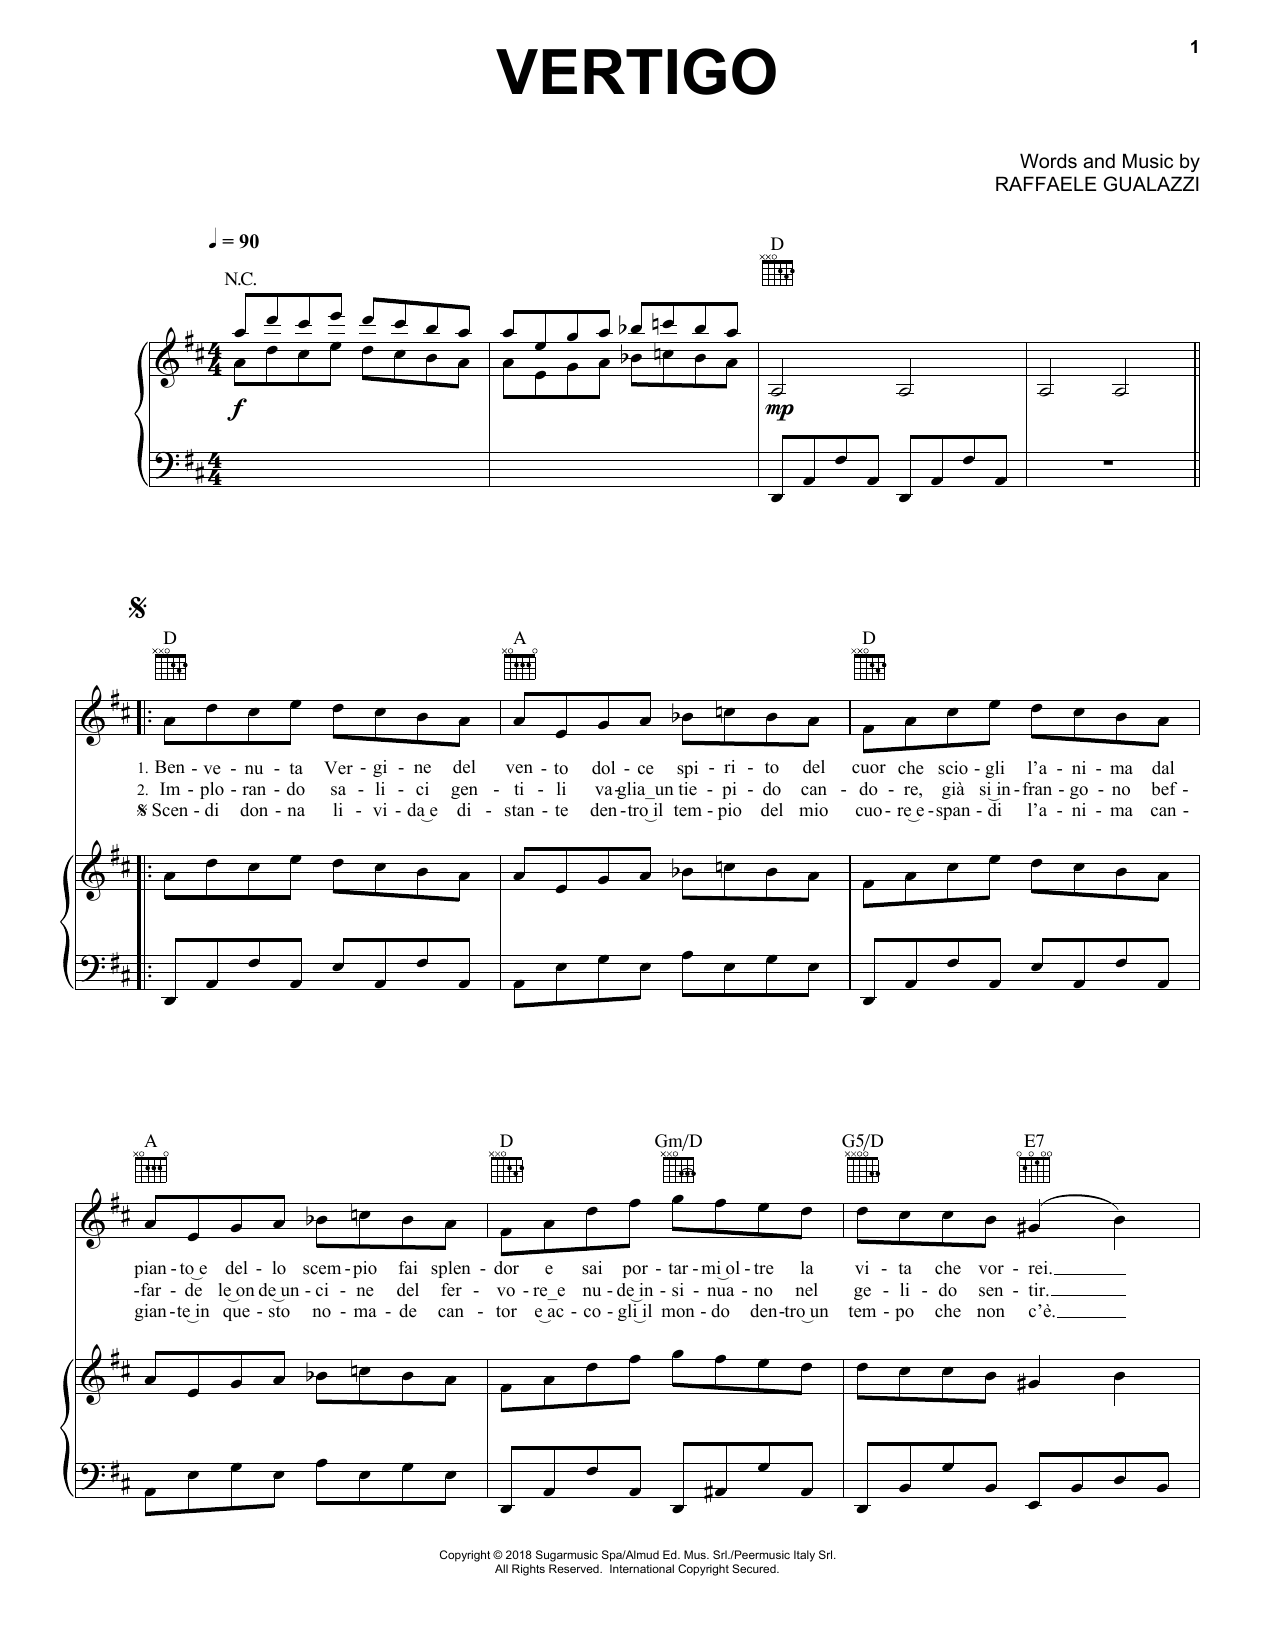 Andrea Bocelli Vertigo Sheet Music Notes & Chords for Piano, Vocal & Guitar (Right-Hand Melody) - Download or Print PDF